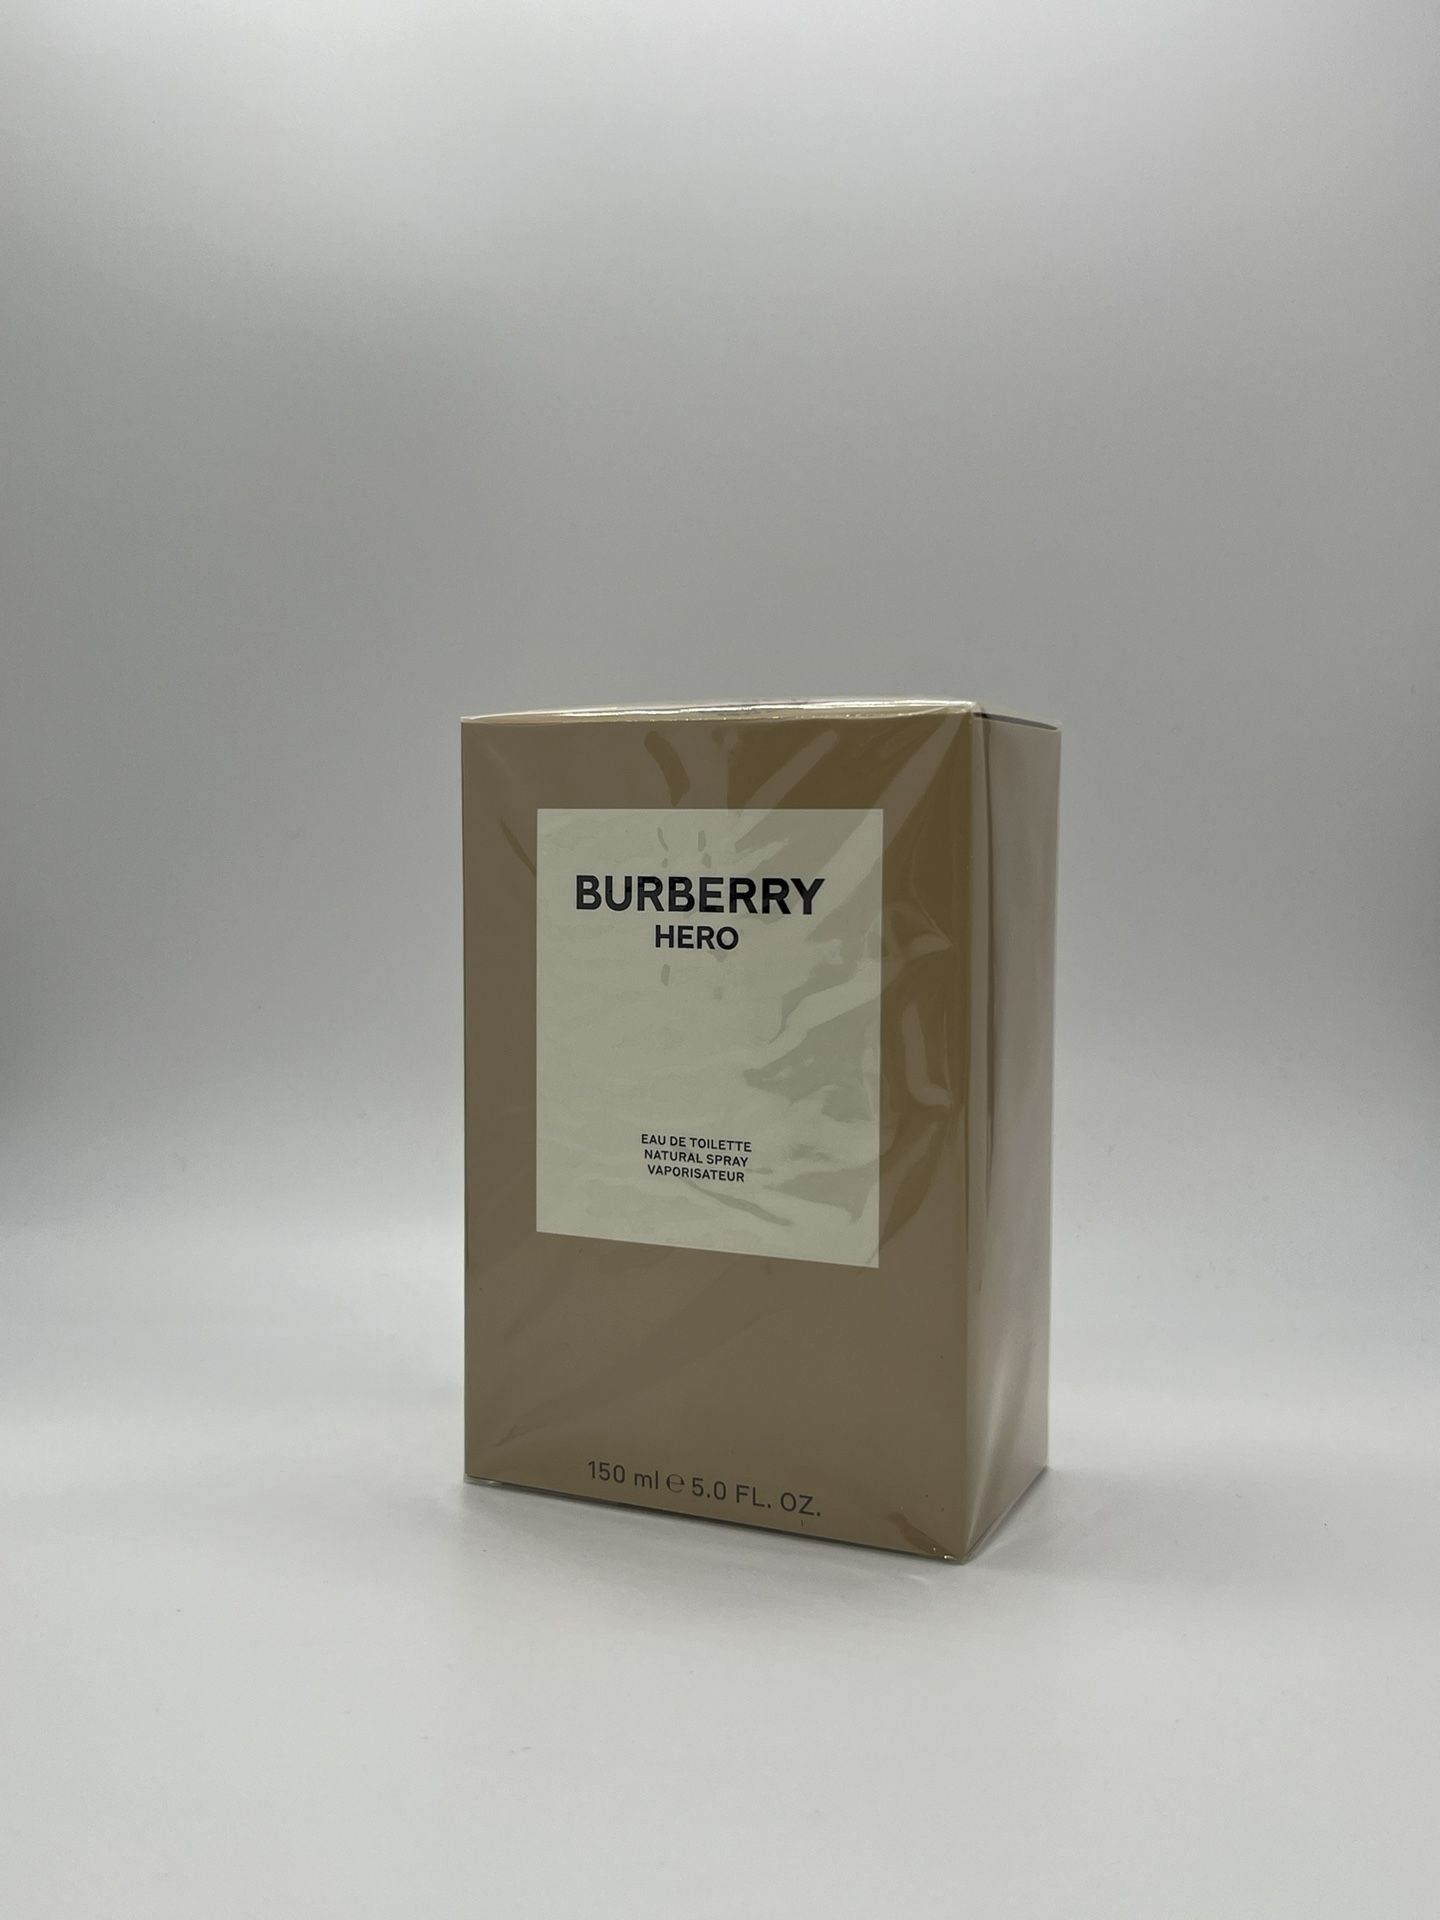 Burberry Hero Eau de Toilette 5 oz (150 ml)